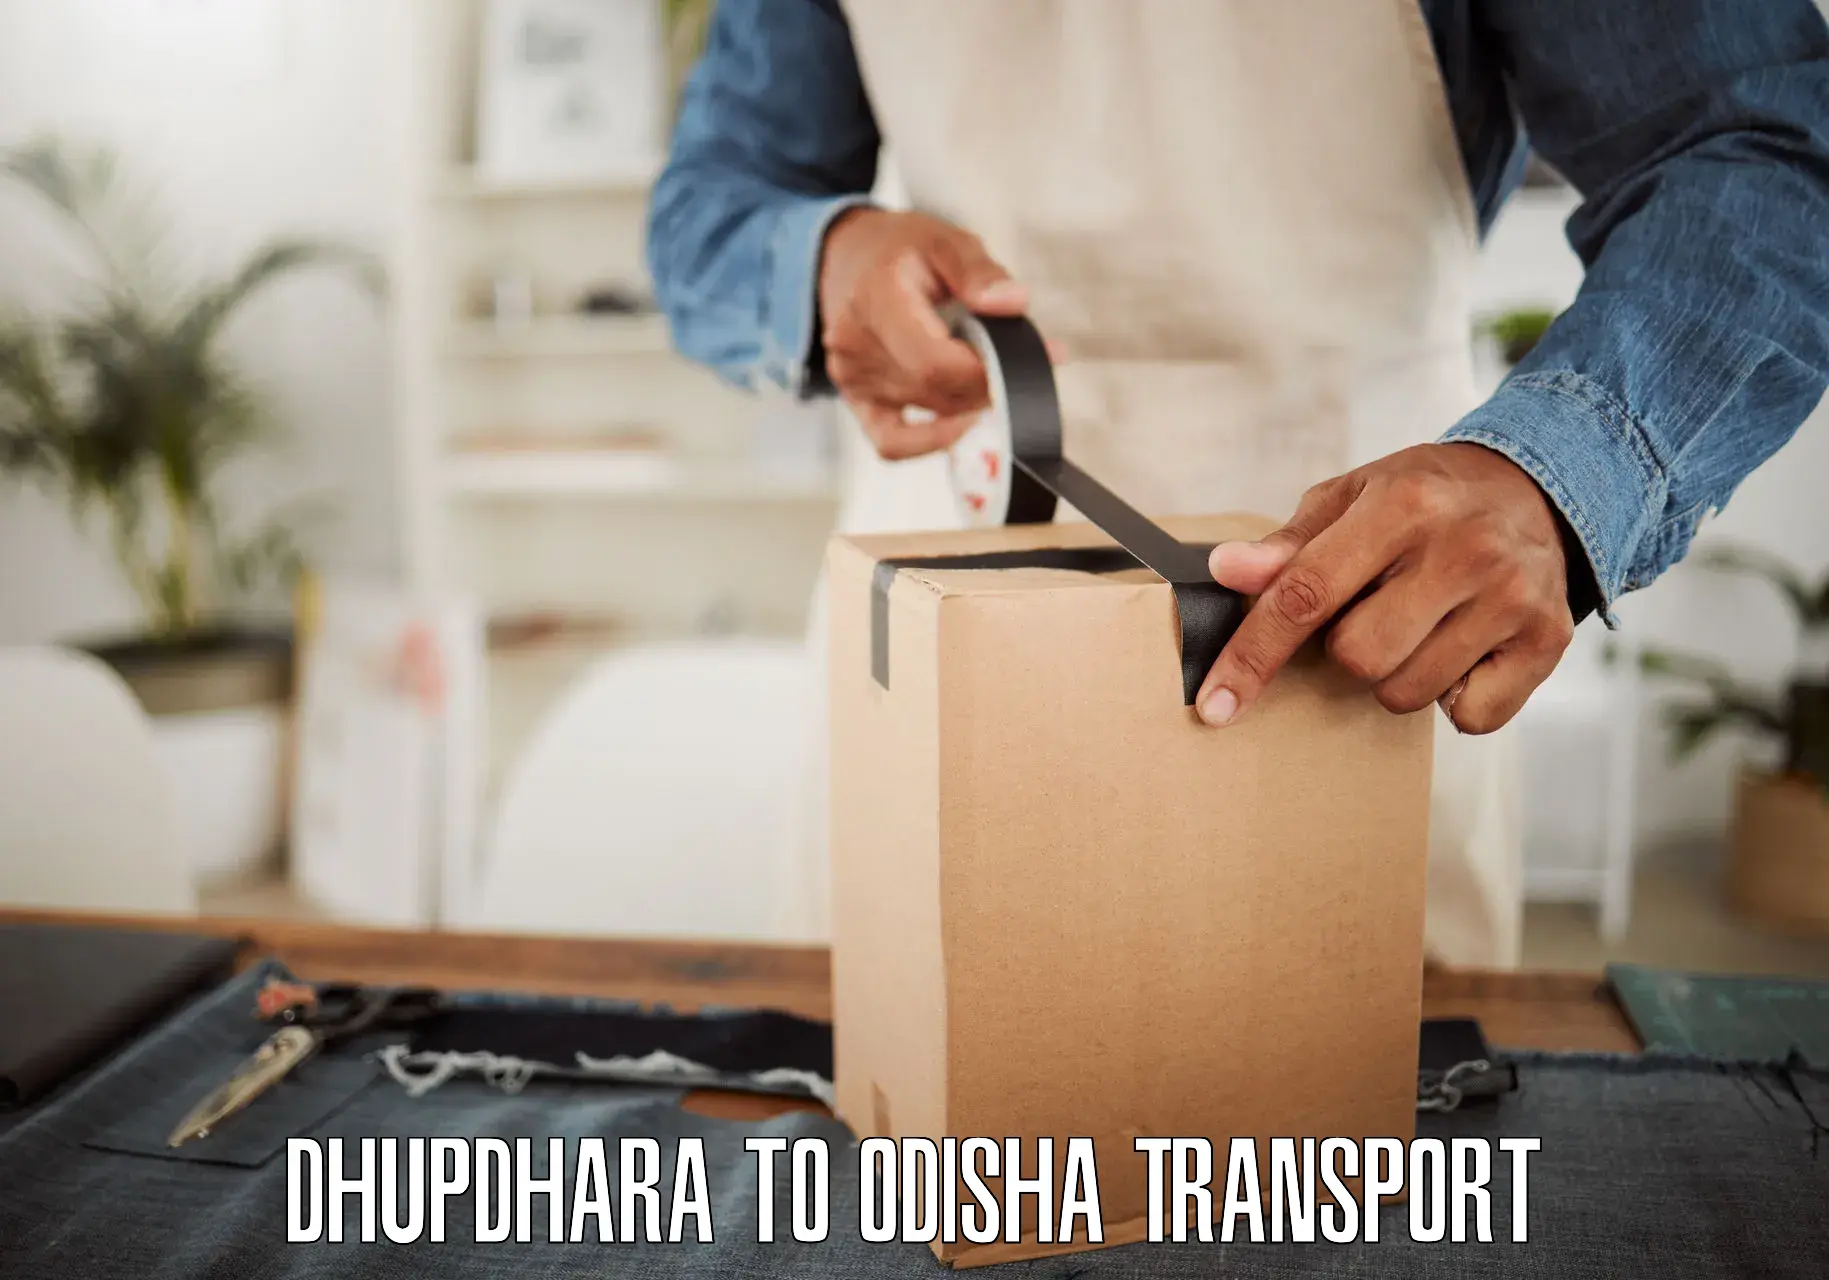 Bike transfer Dhupdhara to Dukura